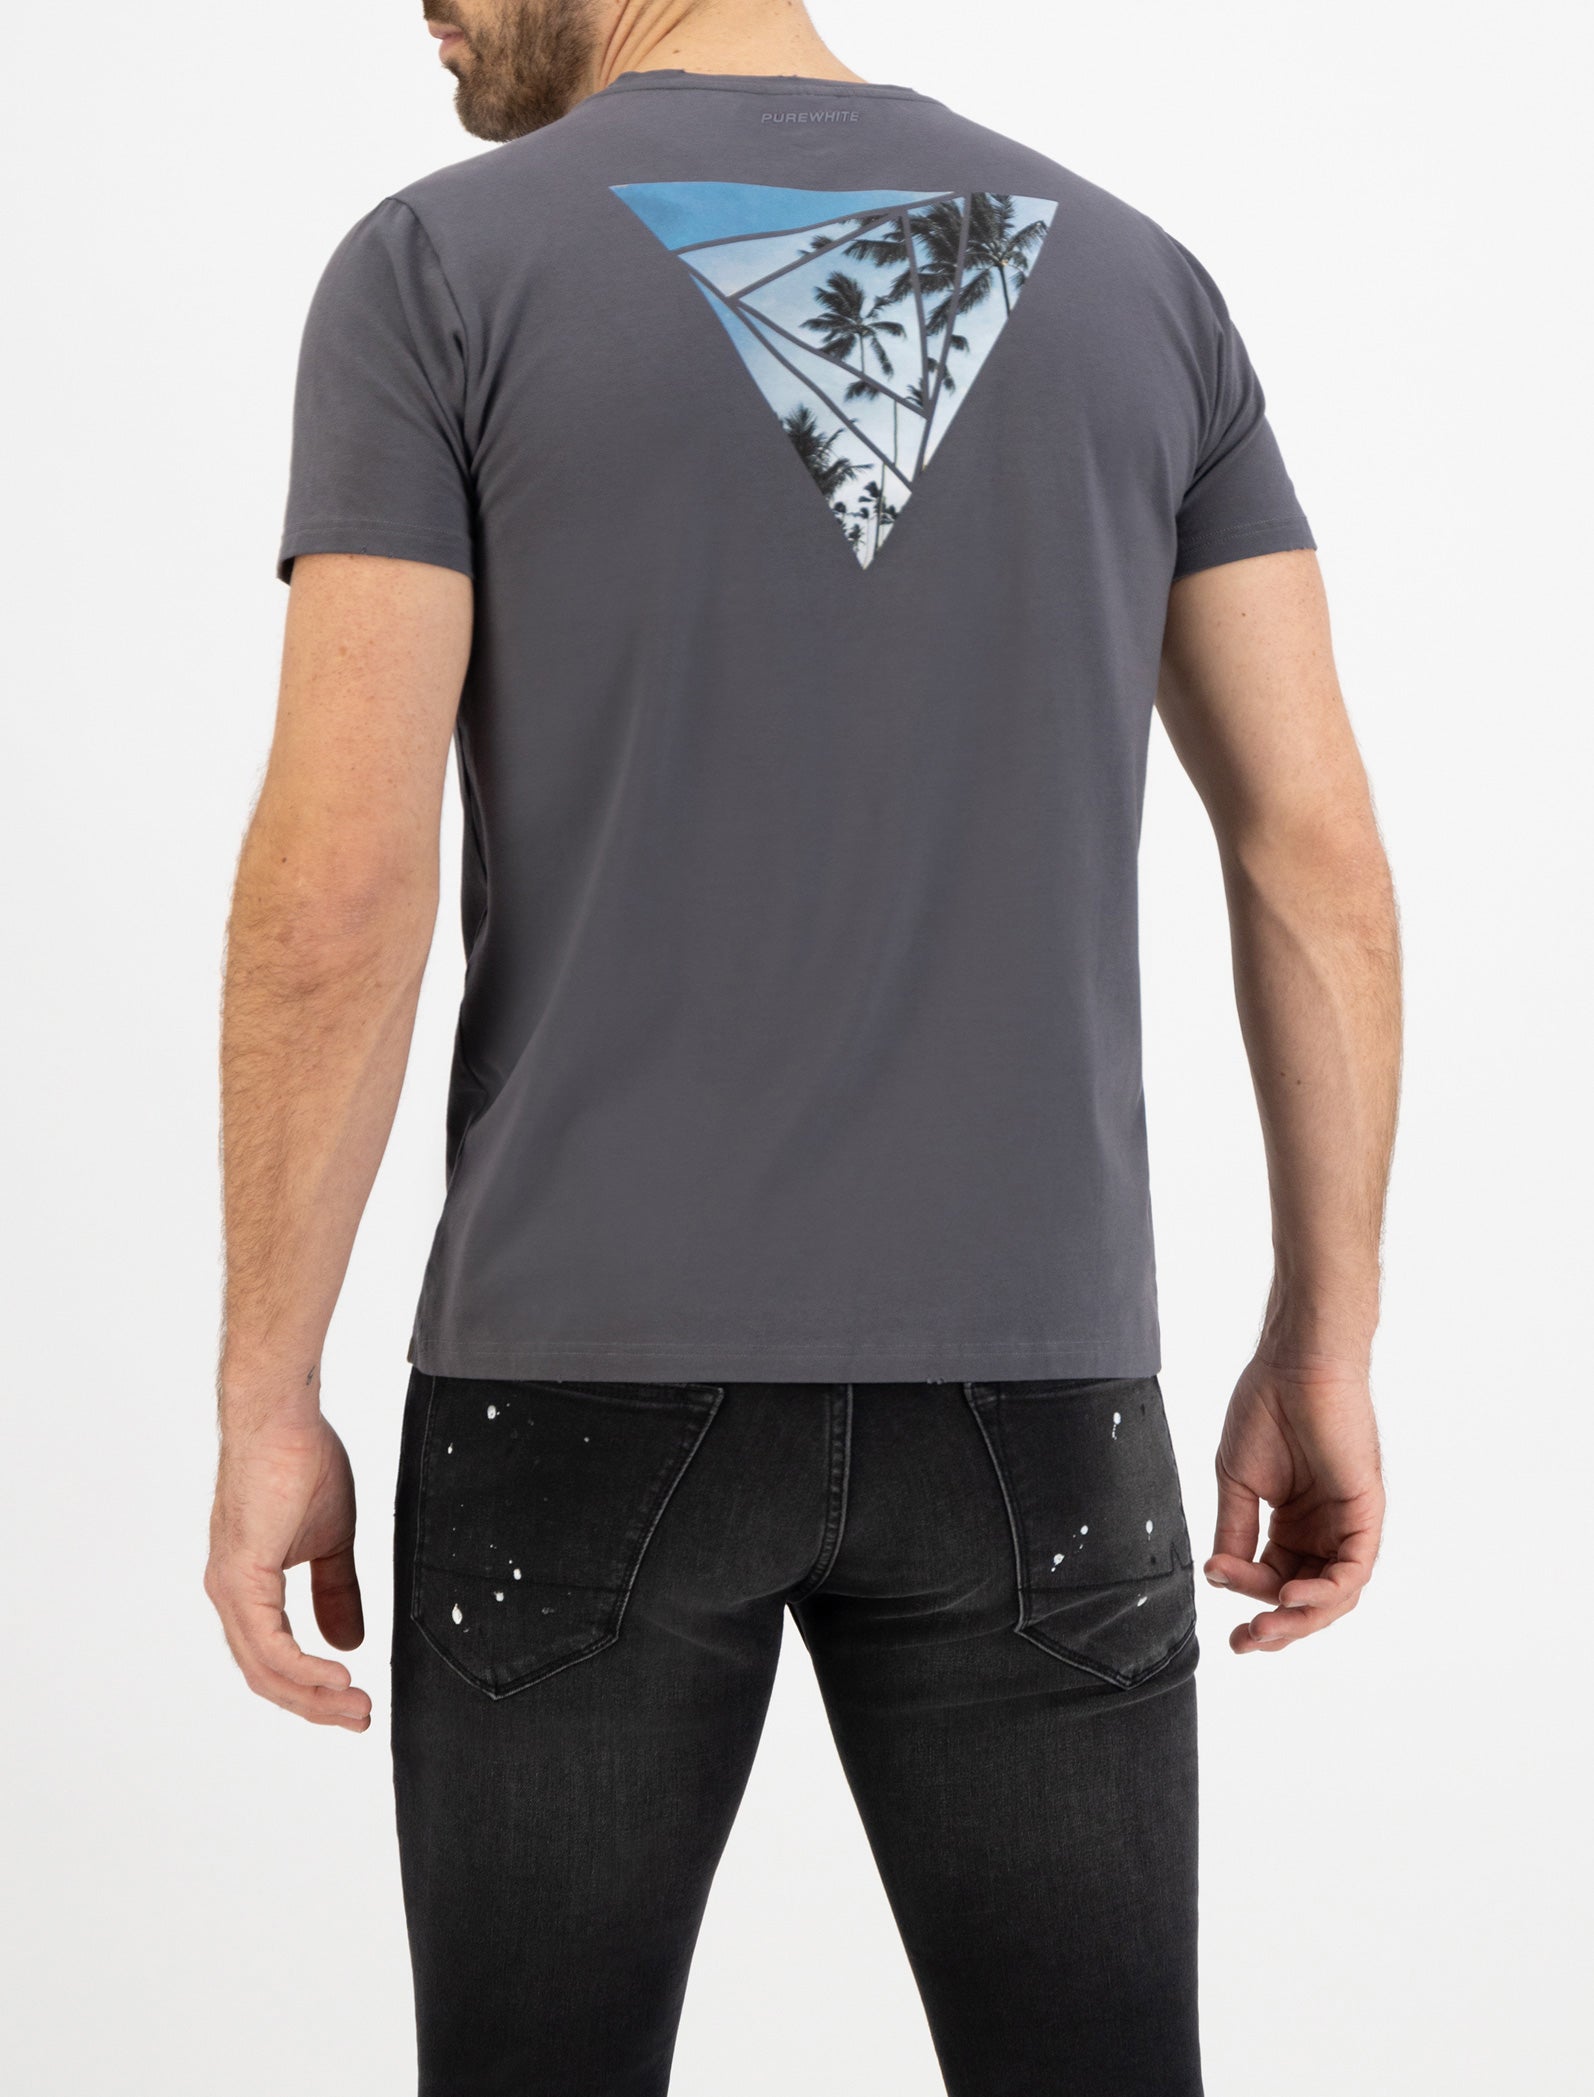 Purewhite T-Shirt Future Triangle grijs